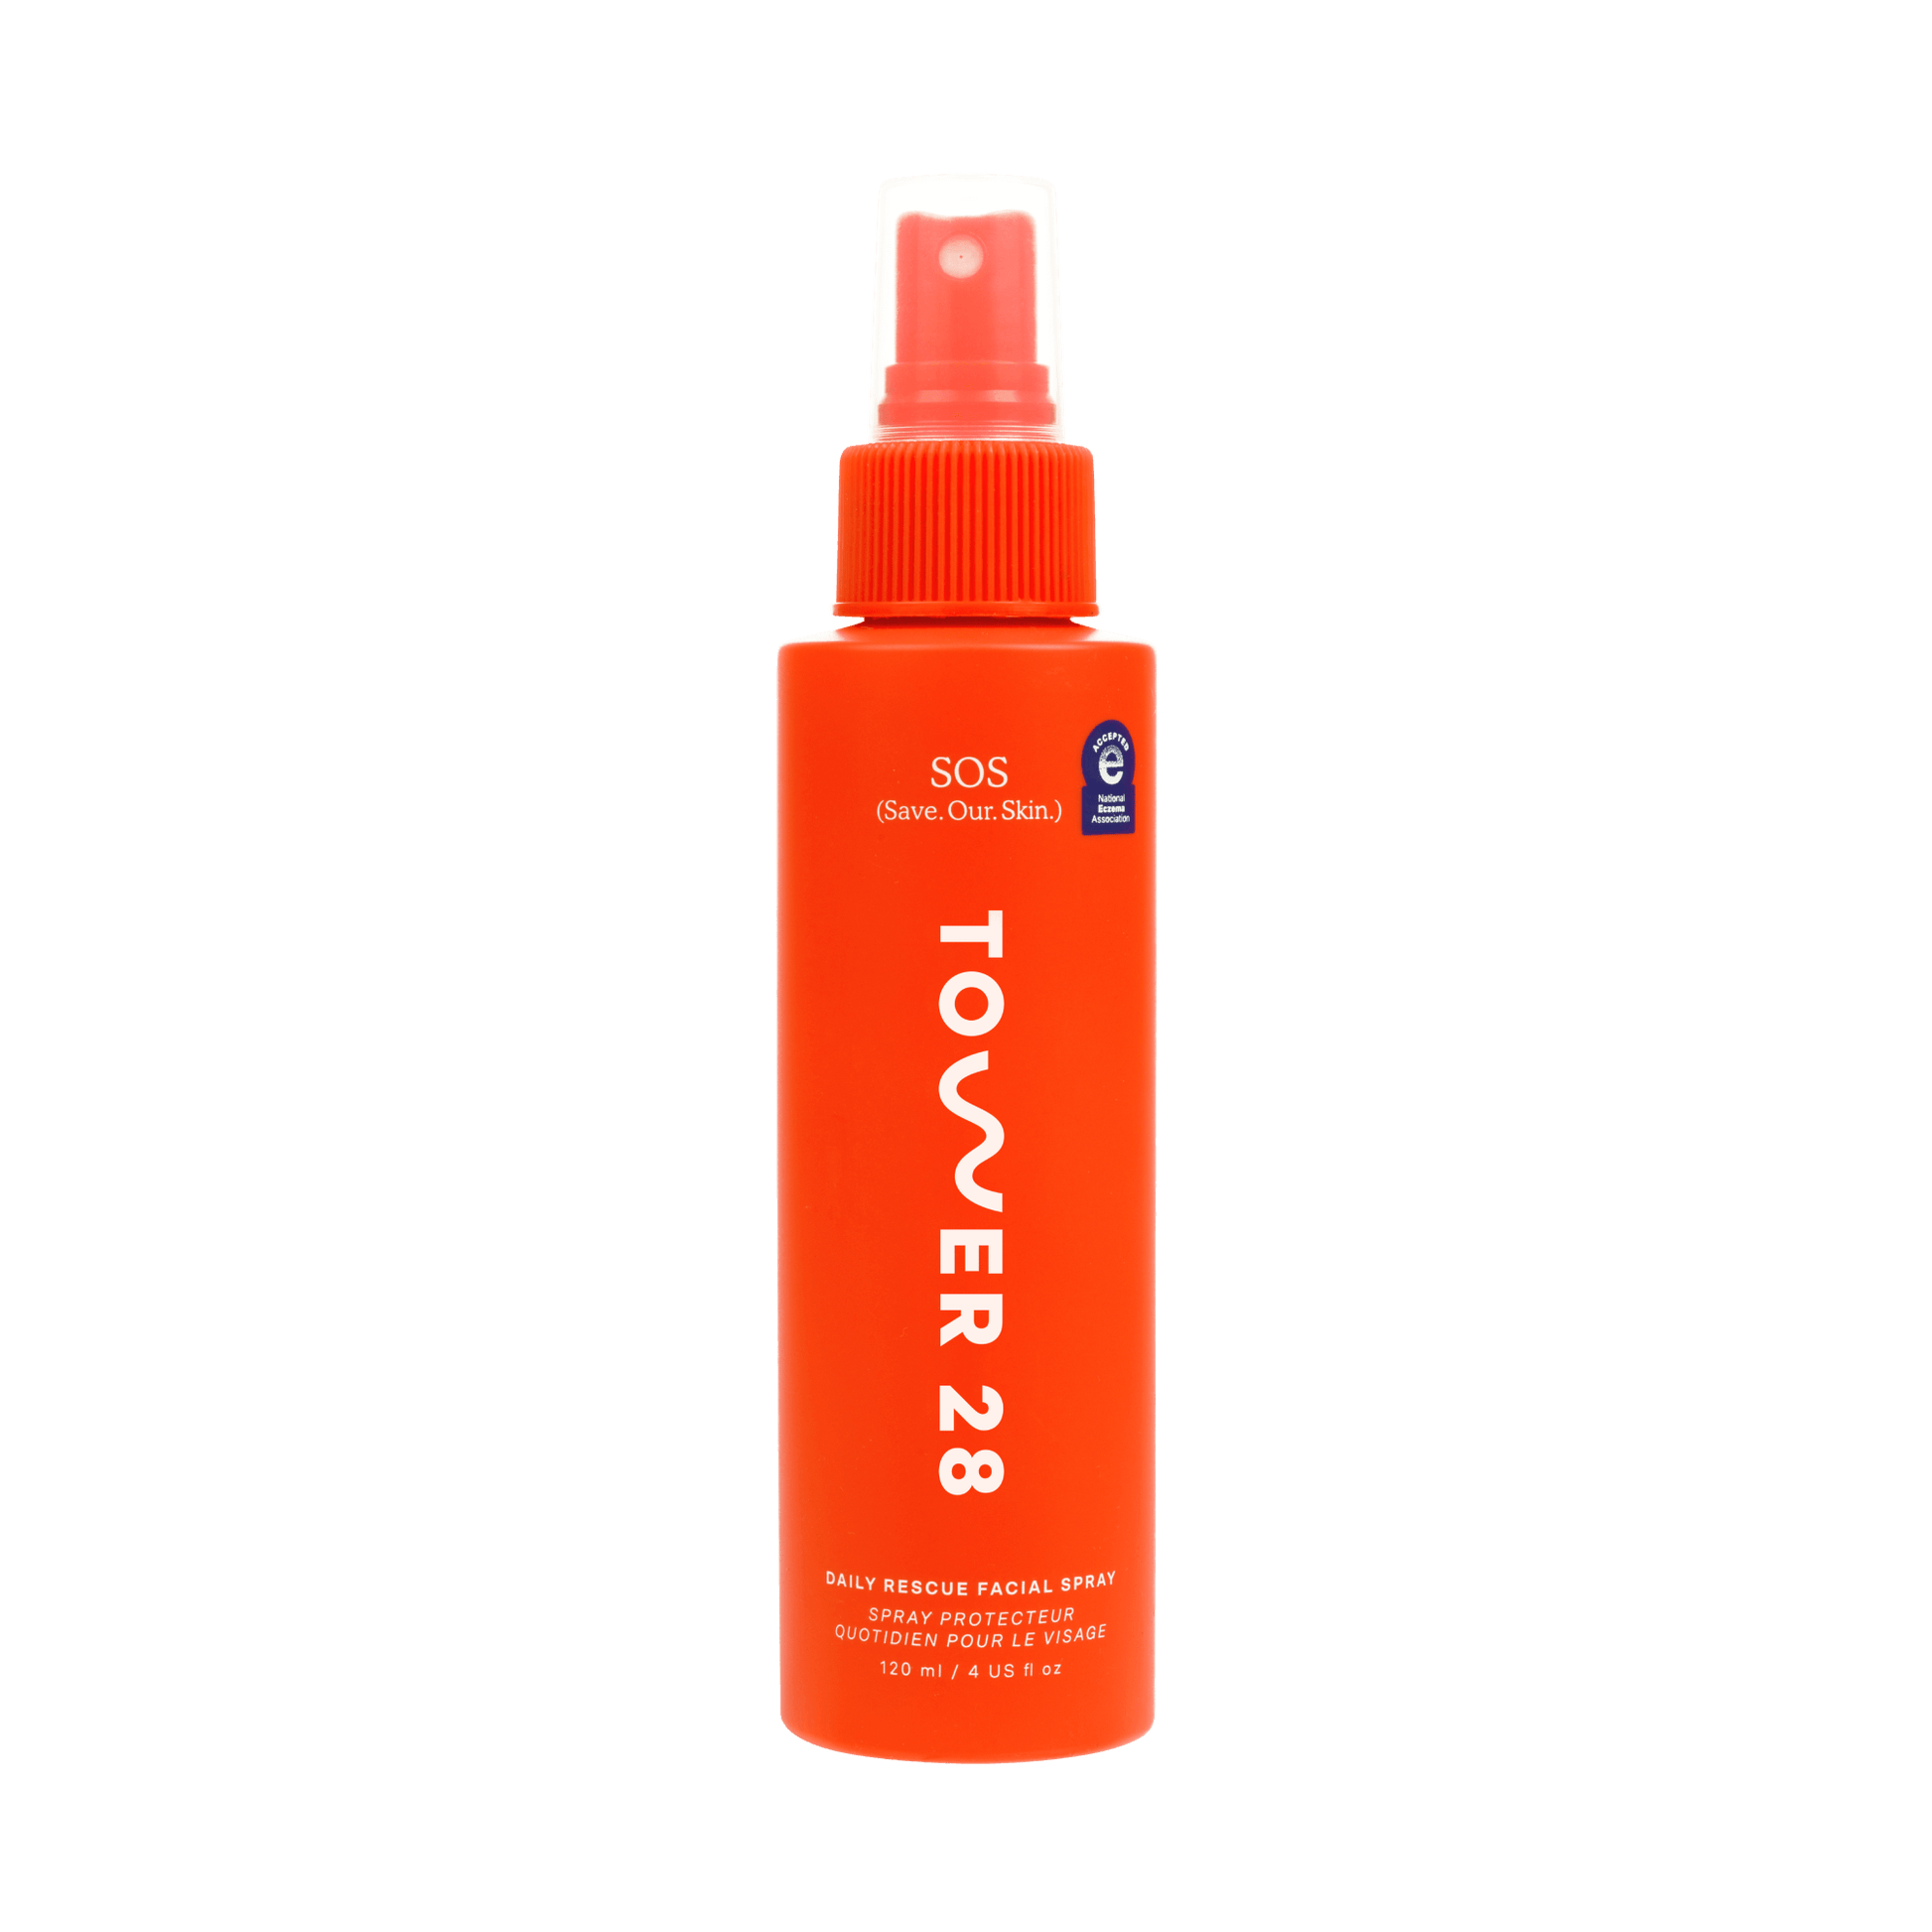 Aérosol dépoussiérant Dustergreen Jelt - 650 ml